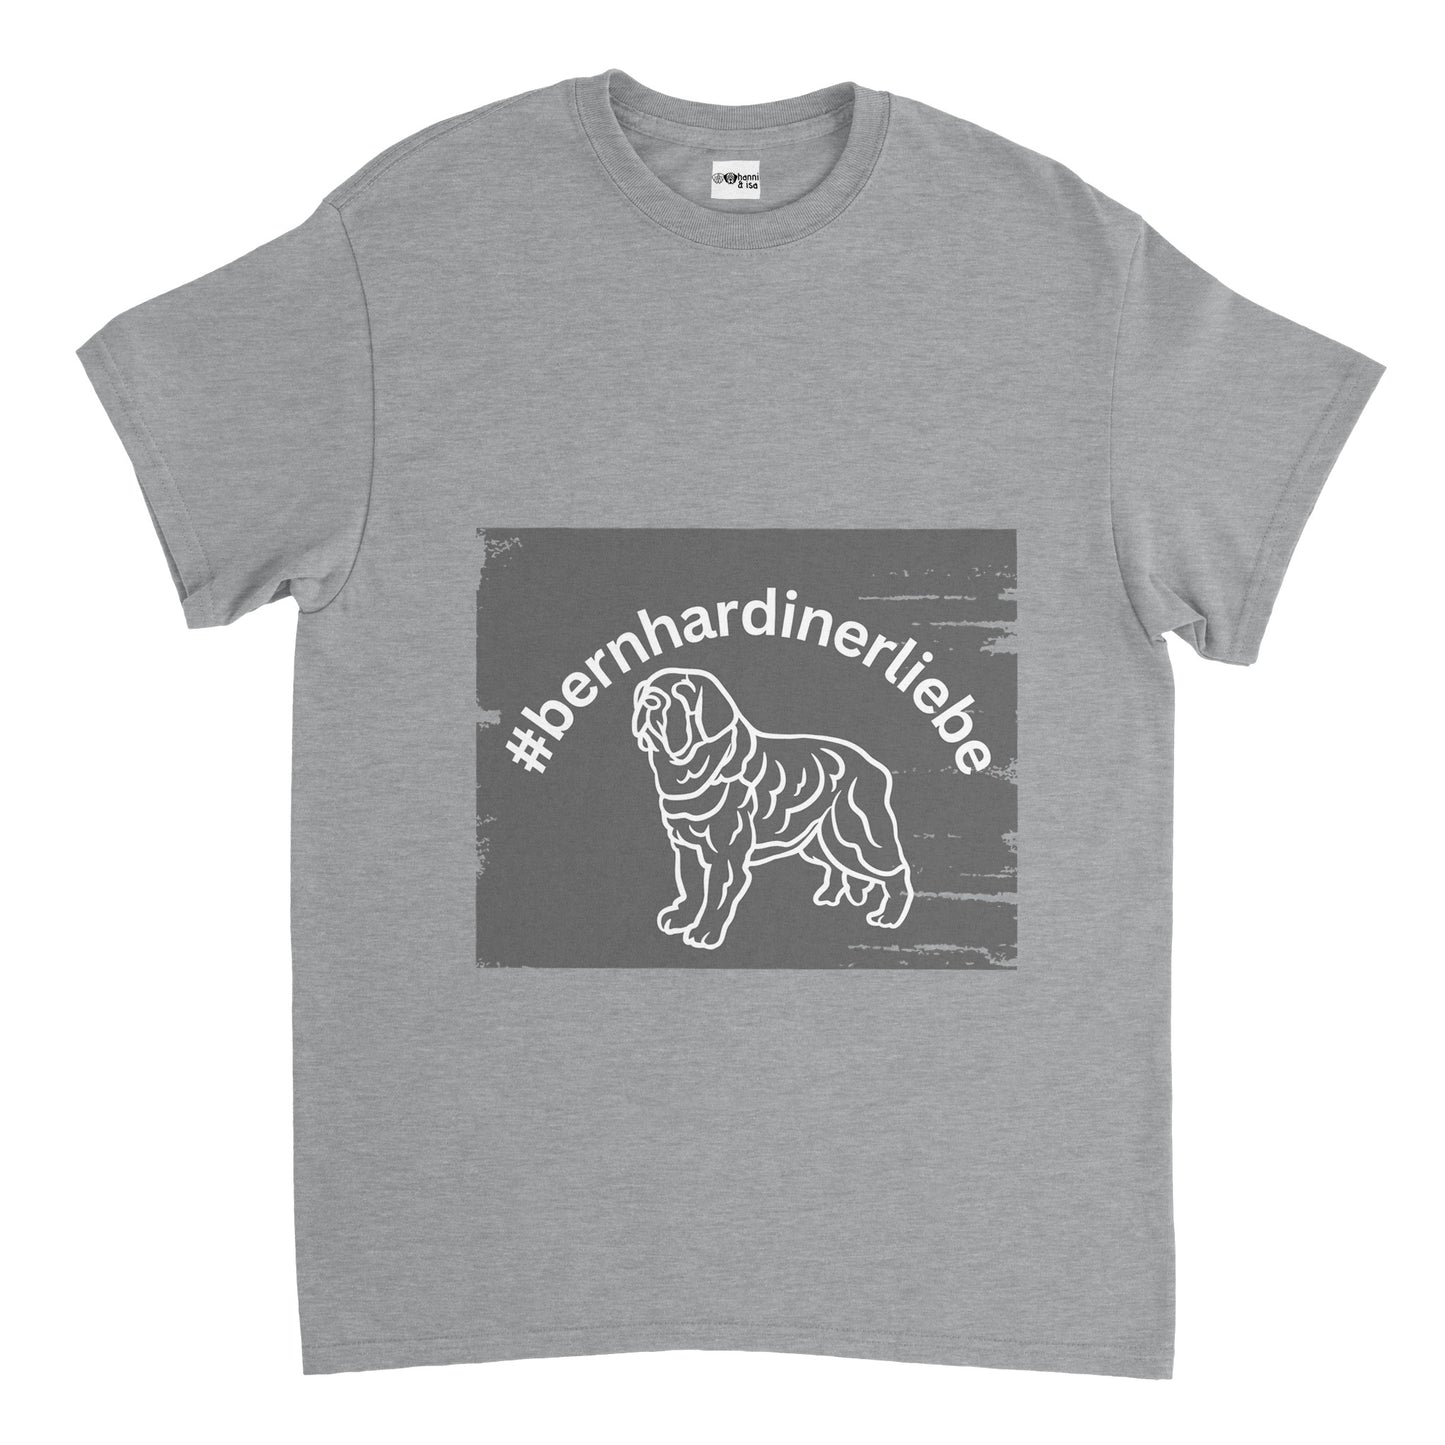 Bernhardinerliebe Tom Herren T - Shirt